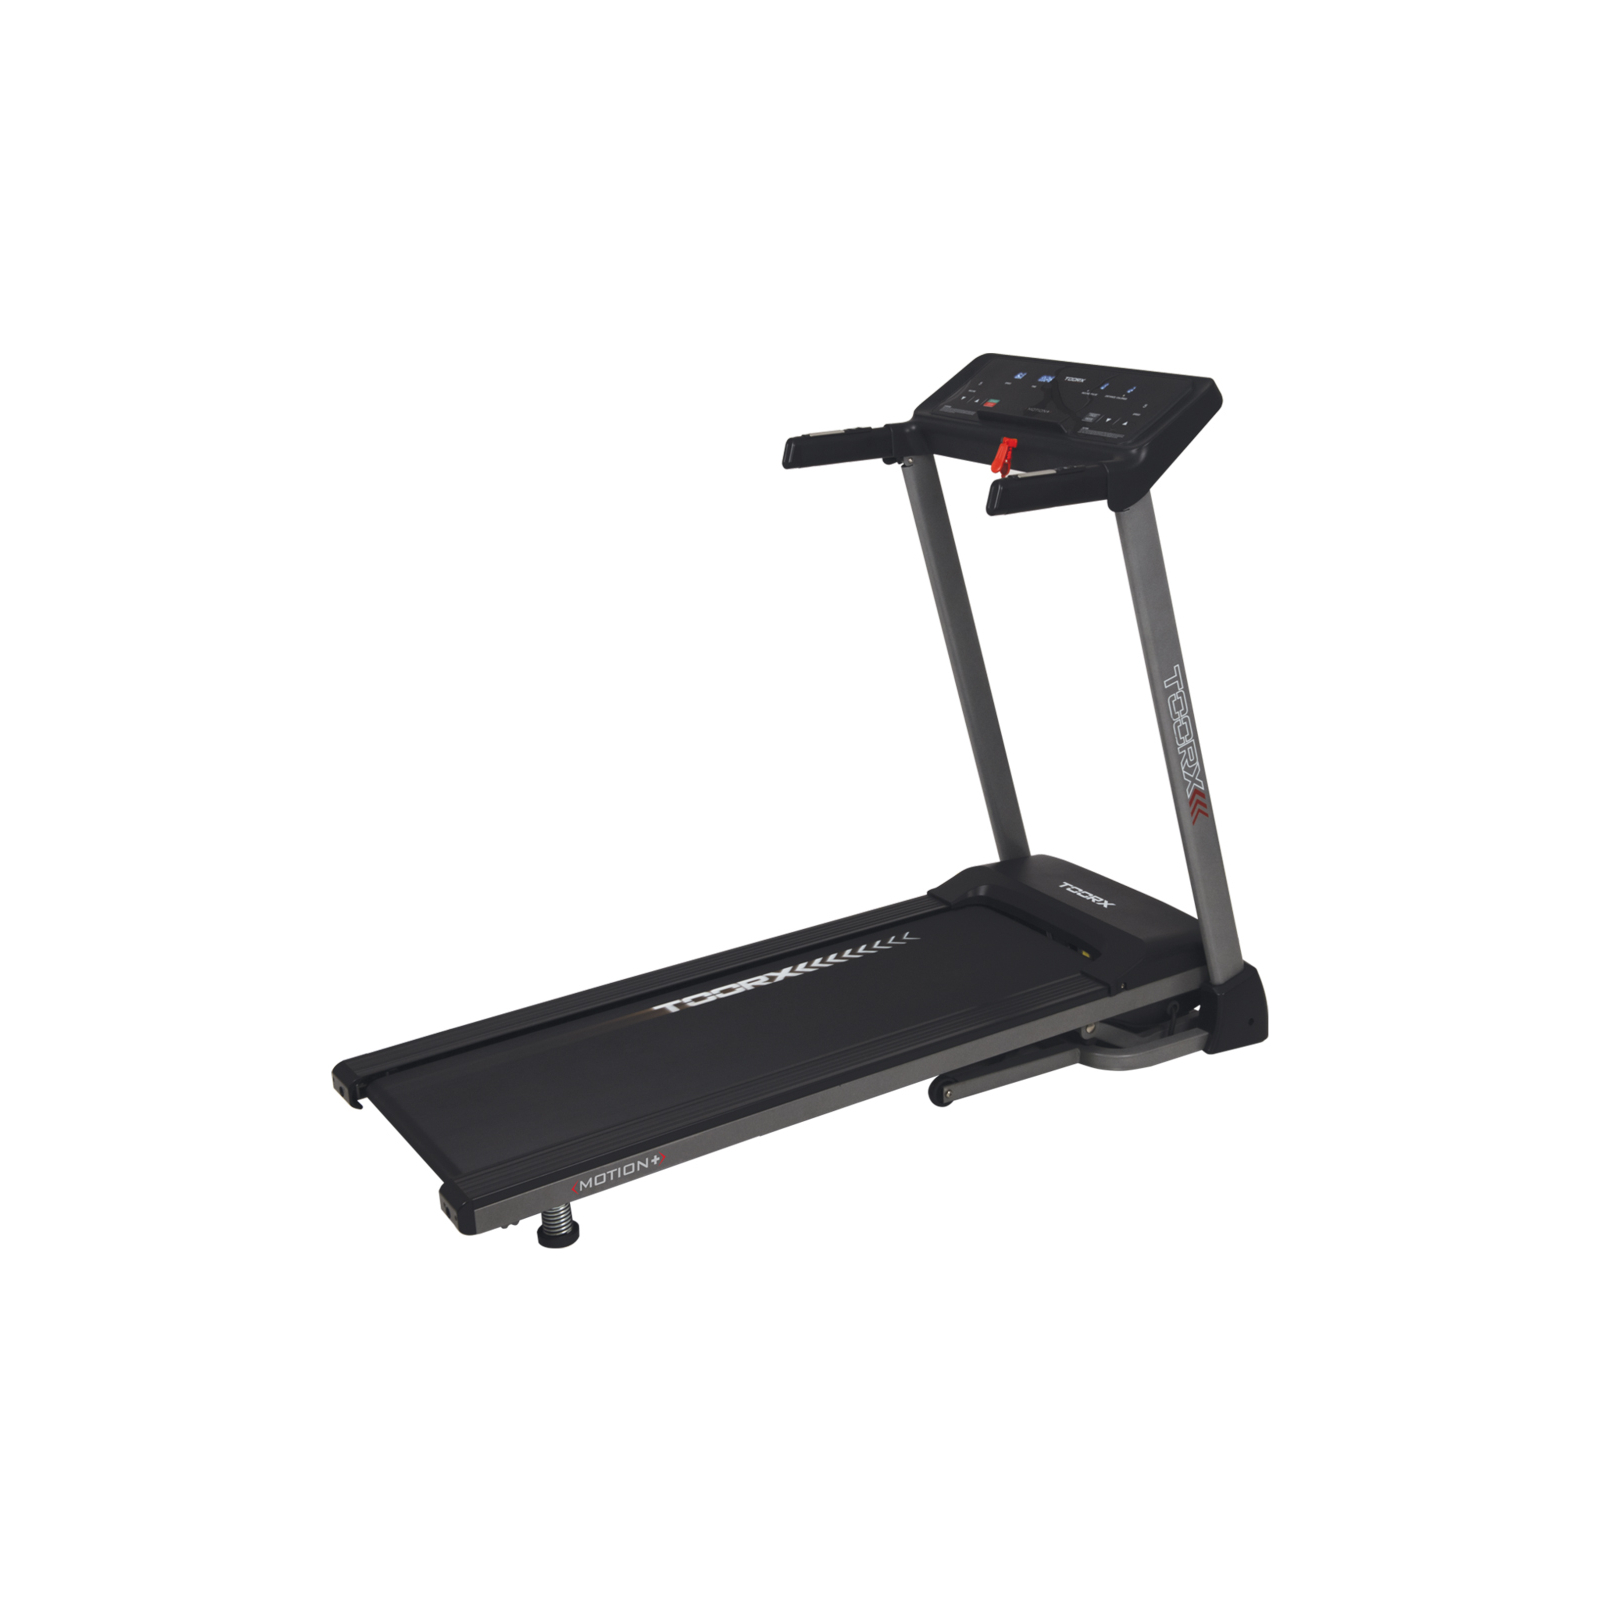 Беговая дорожка Toorx Treadmill Motion Plus (MOTION-PLUS) (929868)